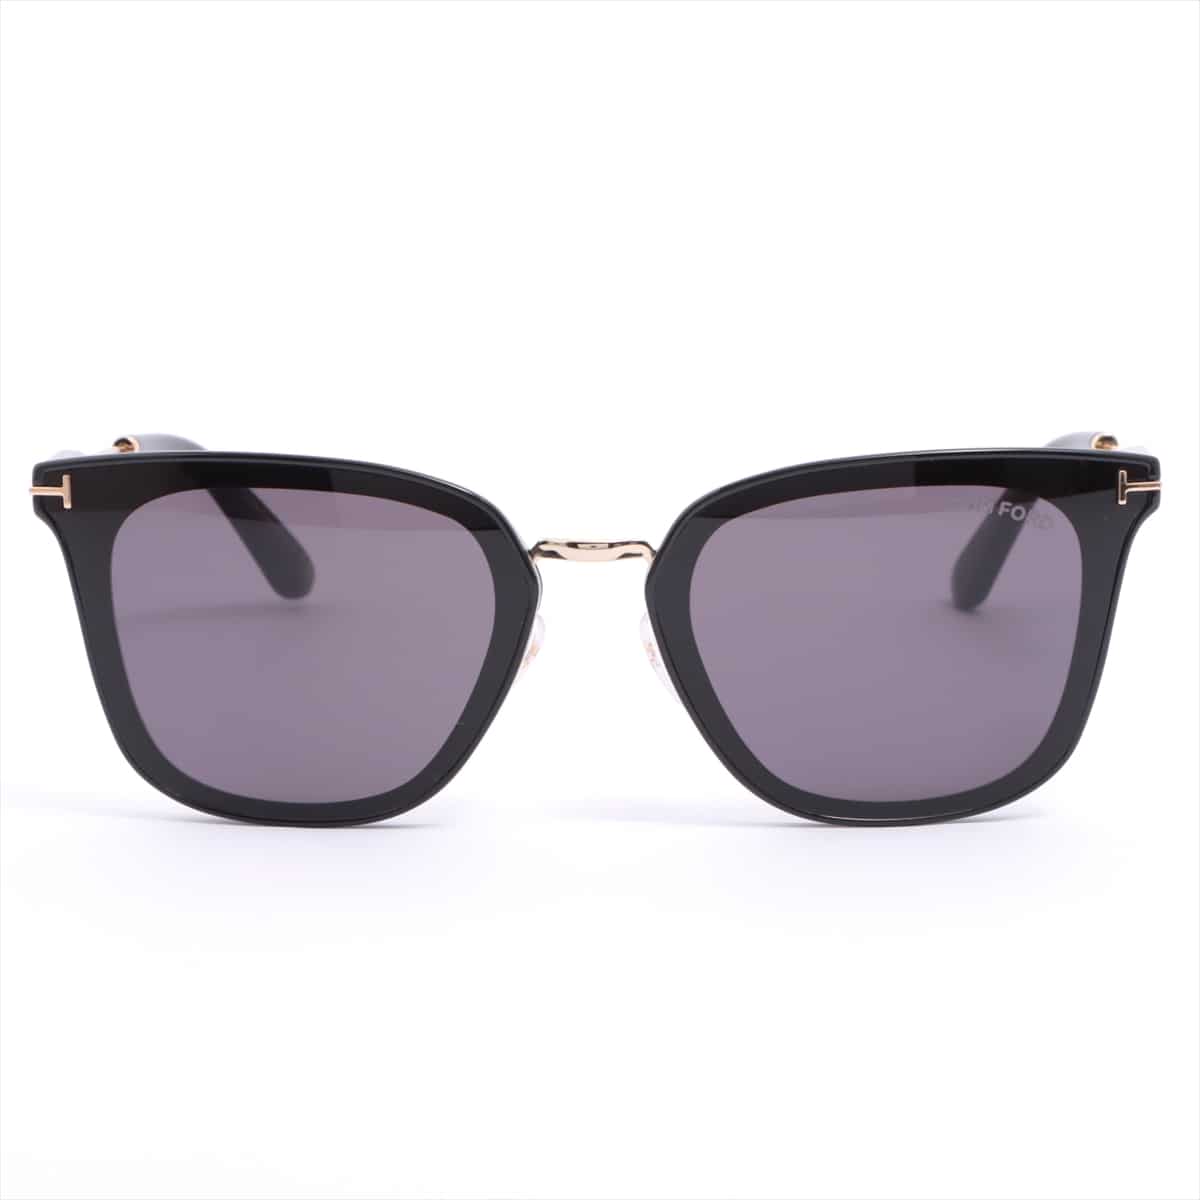 Tom Ford TF 726-K Sunglasses Plastic Black